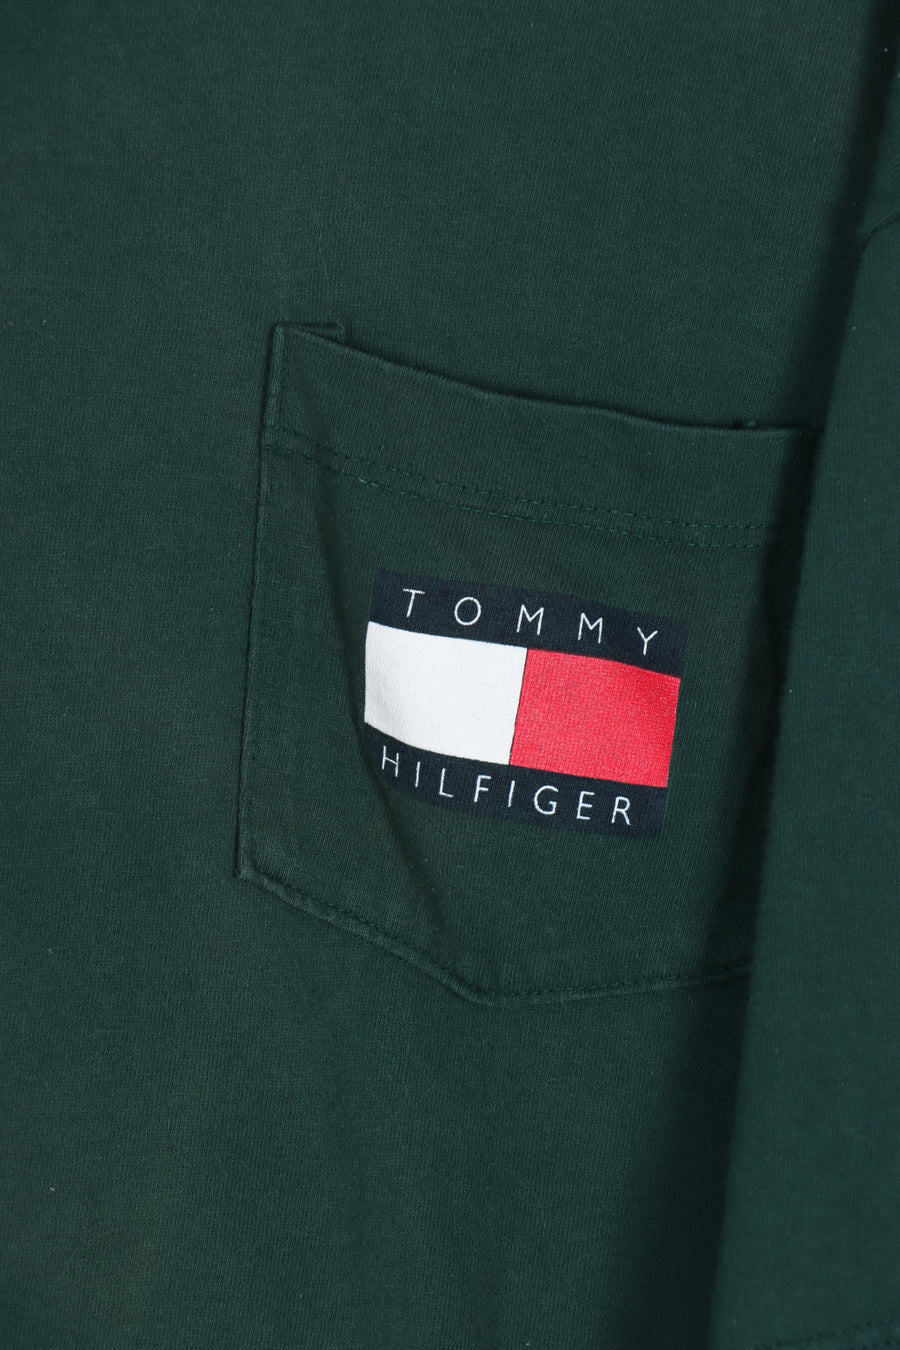 TOMMY HILFIGER Forest Green Pocket Logo Tee  (XXL)